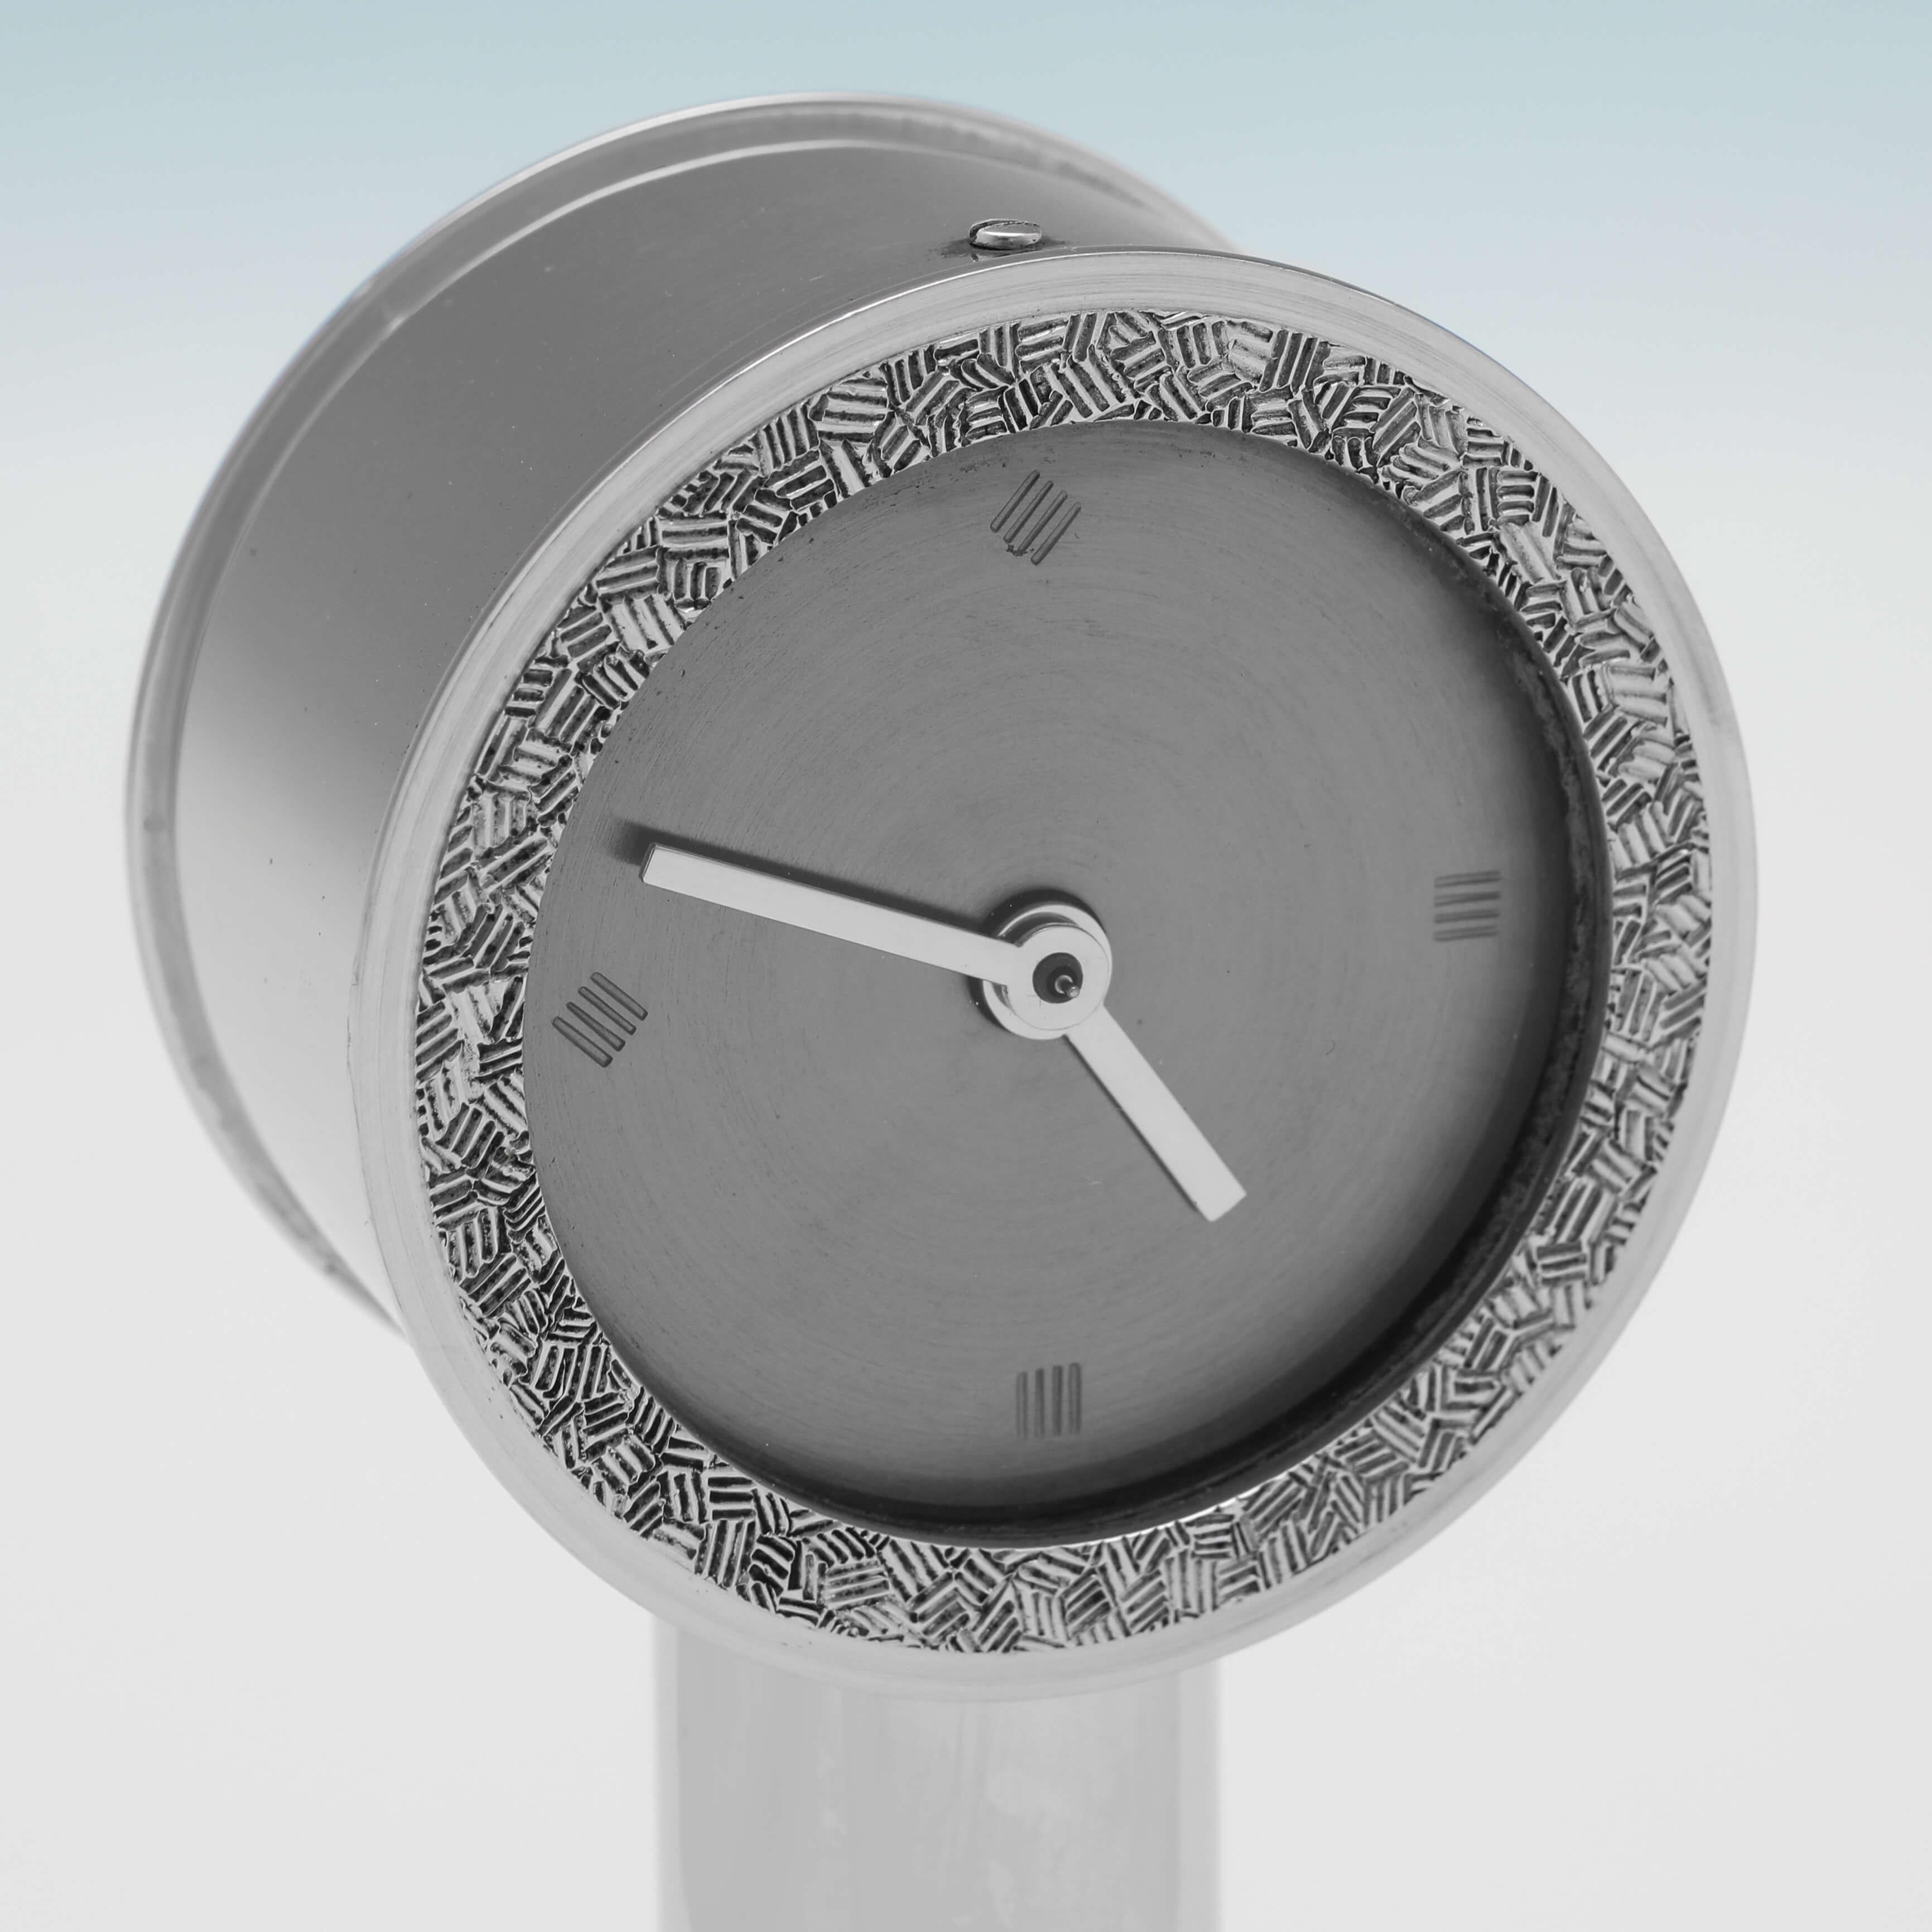 Modernistische Uhr aus Sterlingsilber der Moderne – Simon Benney – London 2006 (Skandinavische Moderne) im Angebot